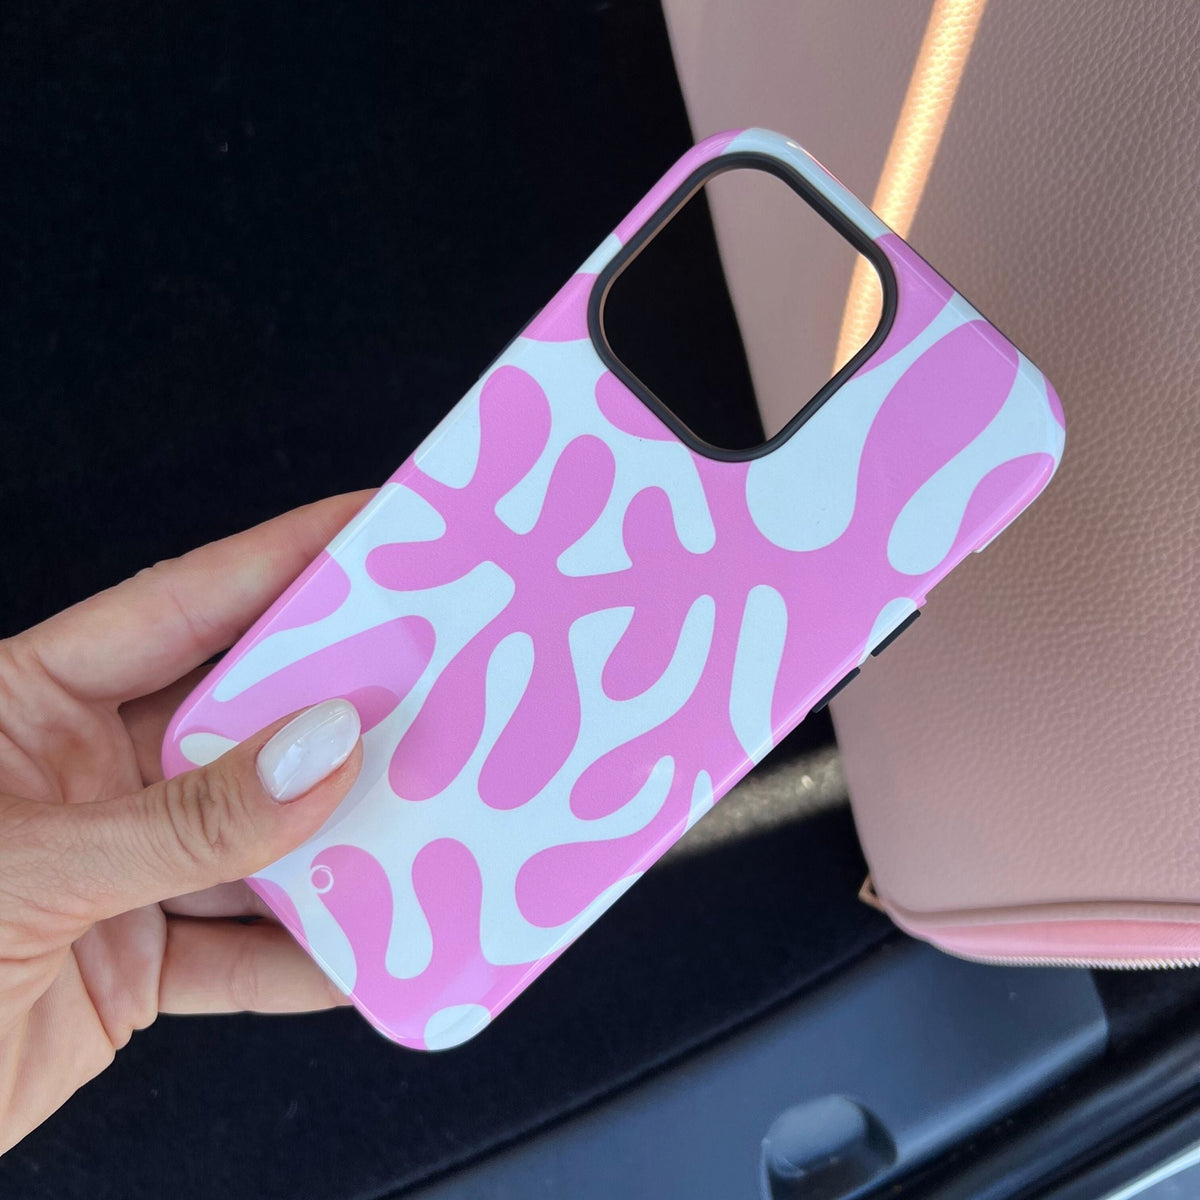 Pink Jungle iPhone Case - iPhone 15 Pro Max